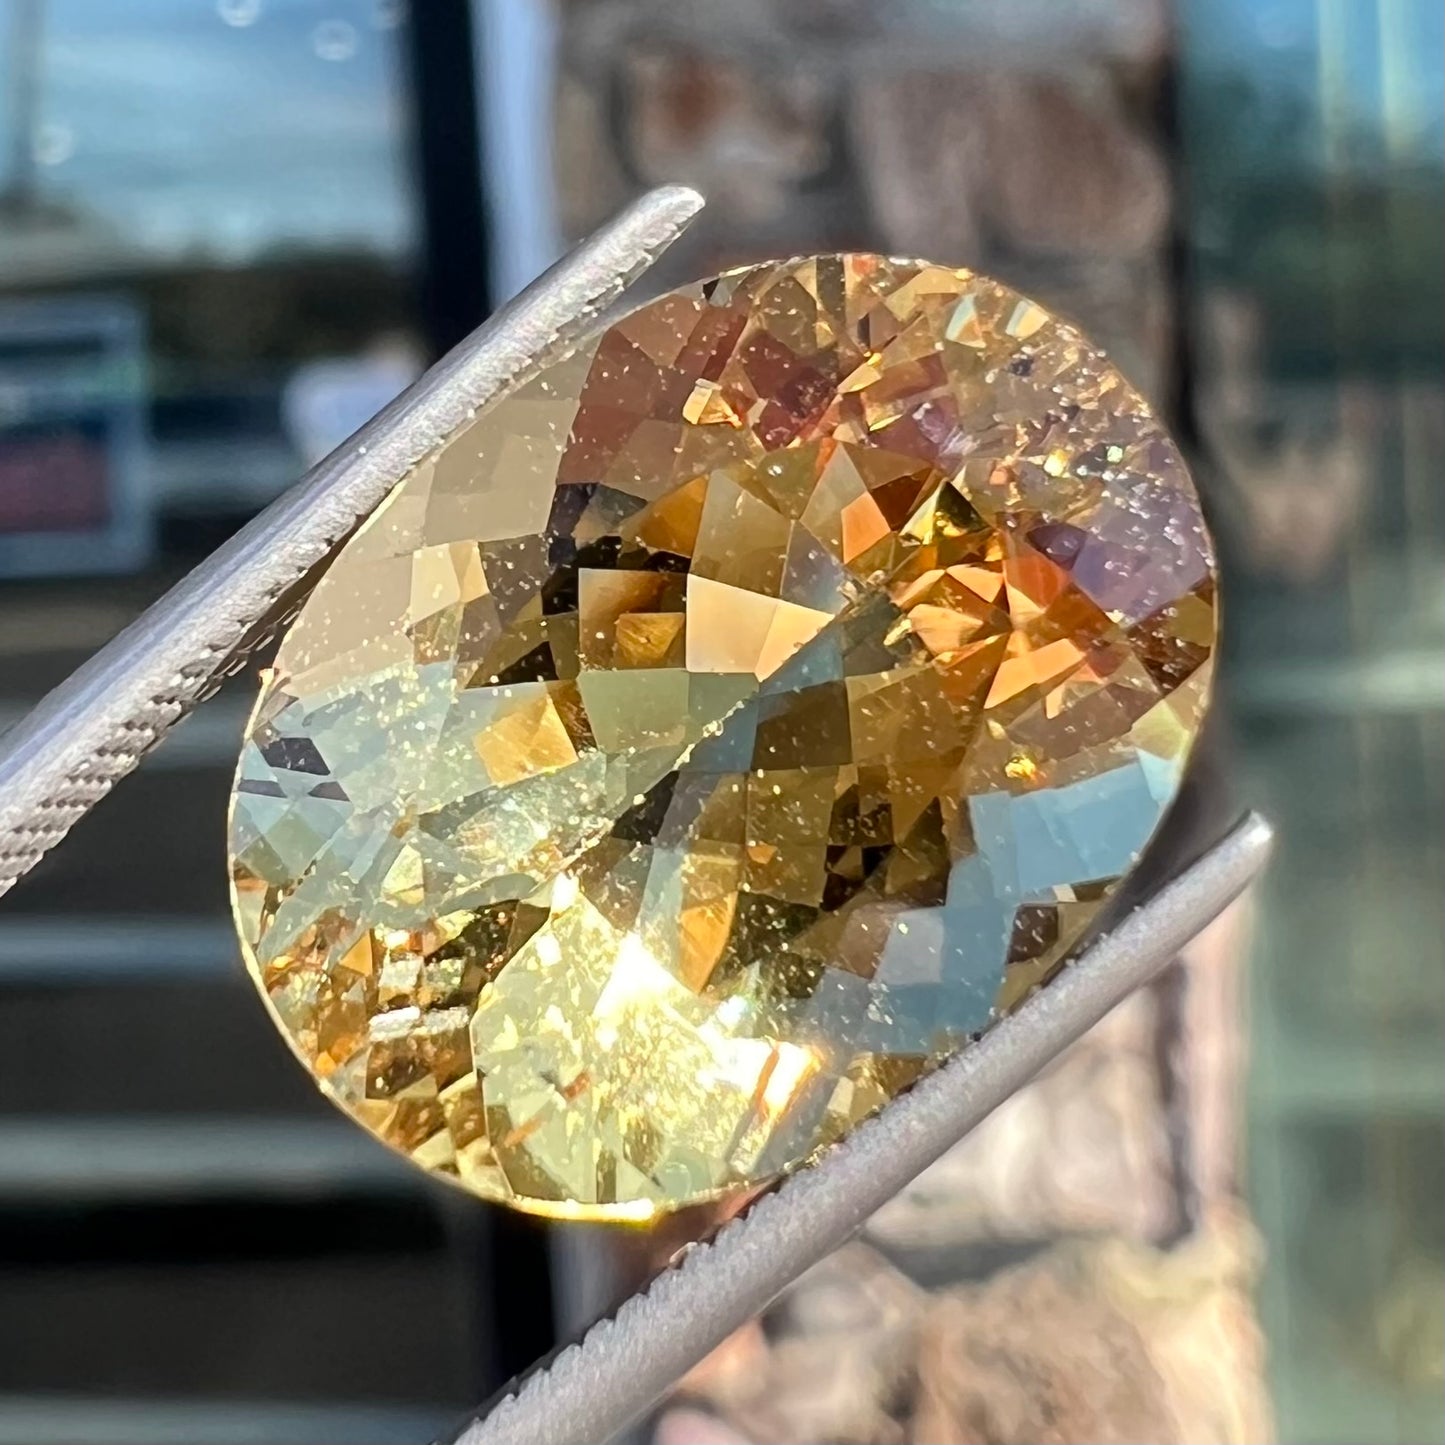 A faceted, oval cut golden beryl gemstone.